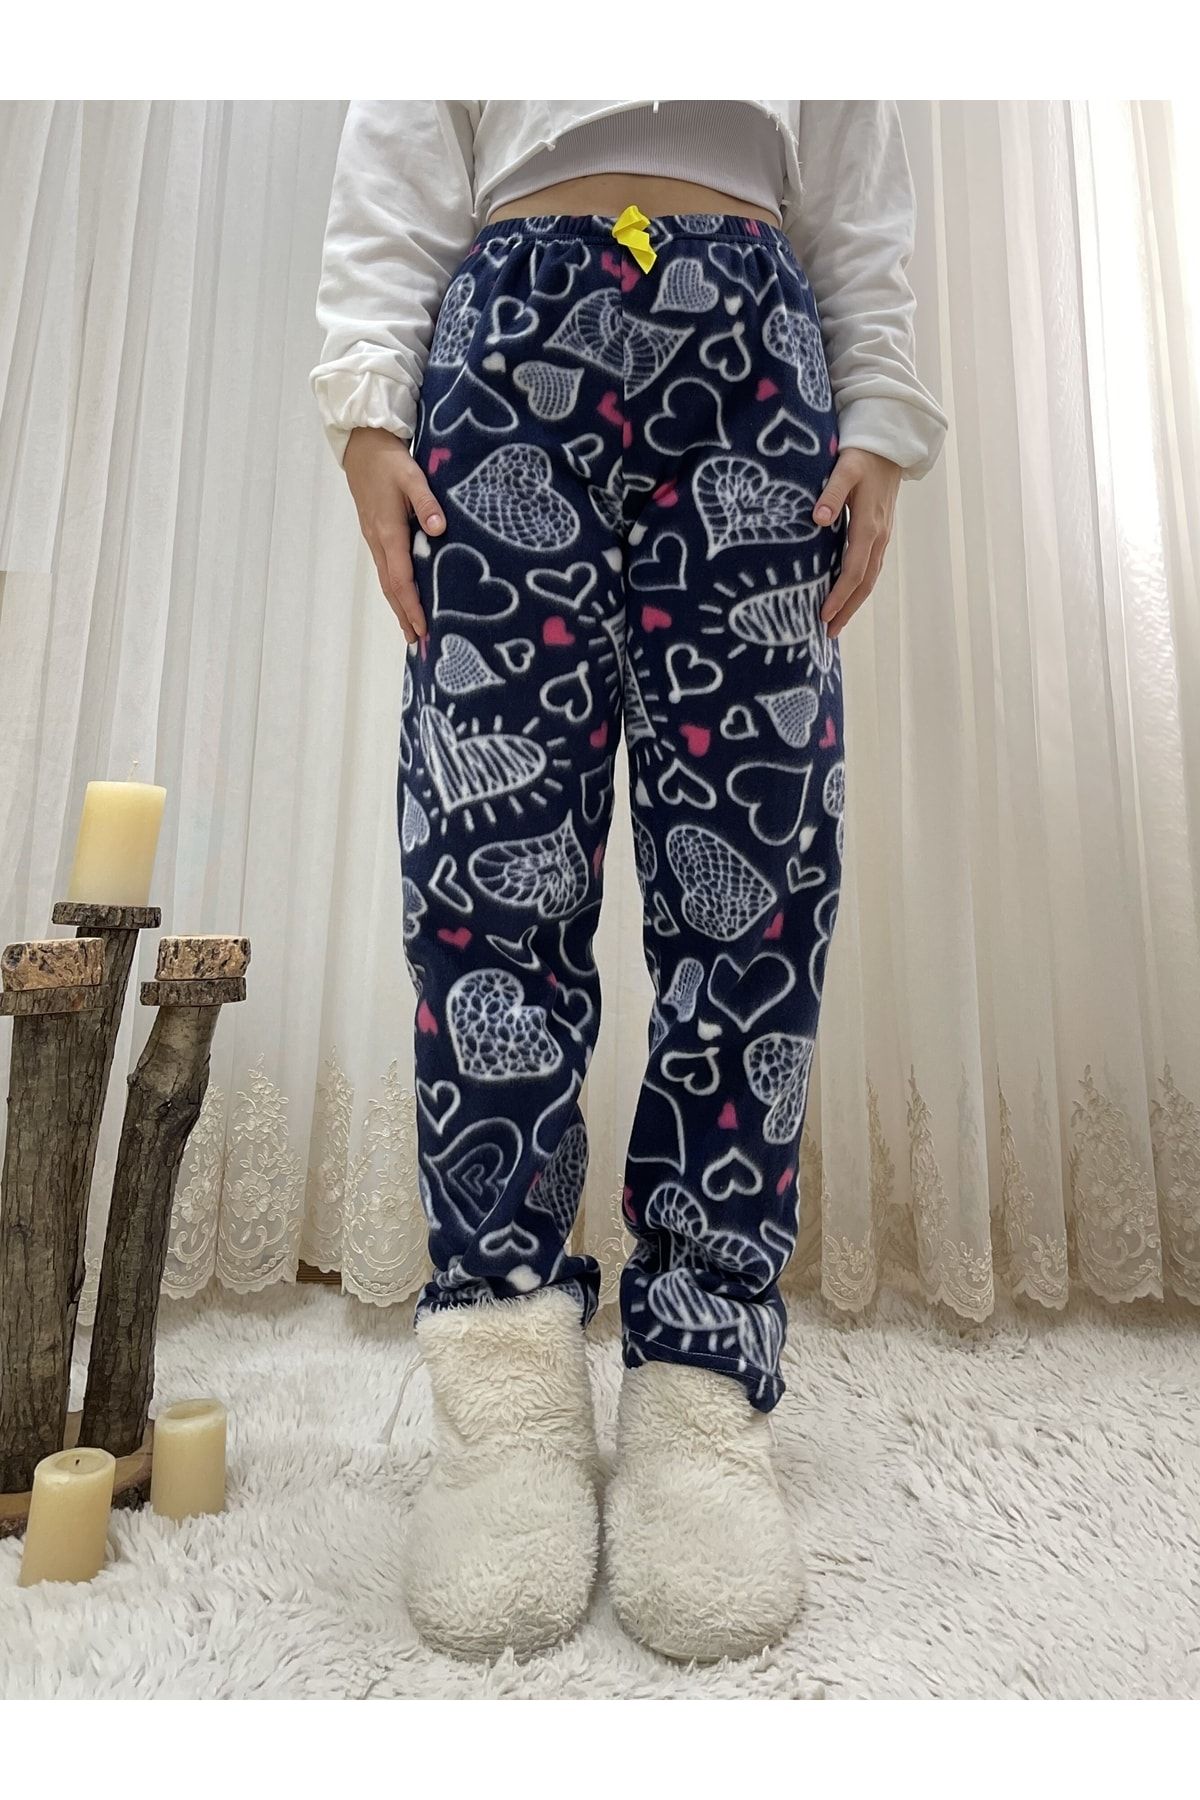 Betimoda White Big Heart Women's Fleece Pajama Bottoms Winter